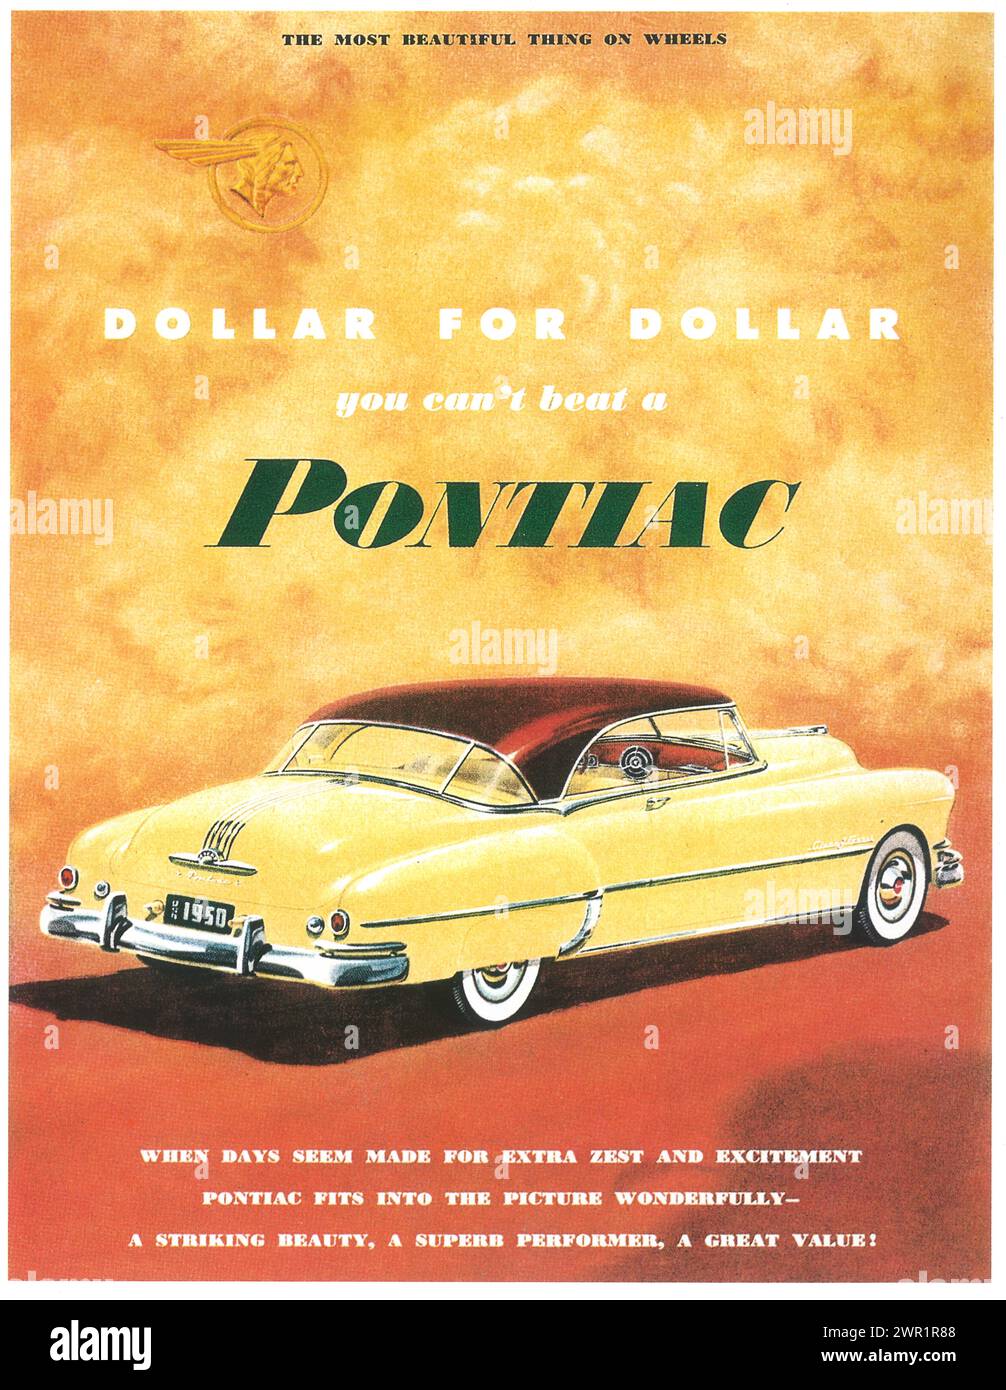 1950 Pontiac Super De Luxe Catalina Printanzeige Stockfoto